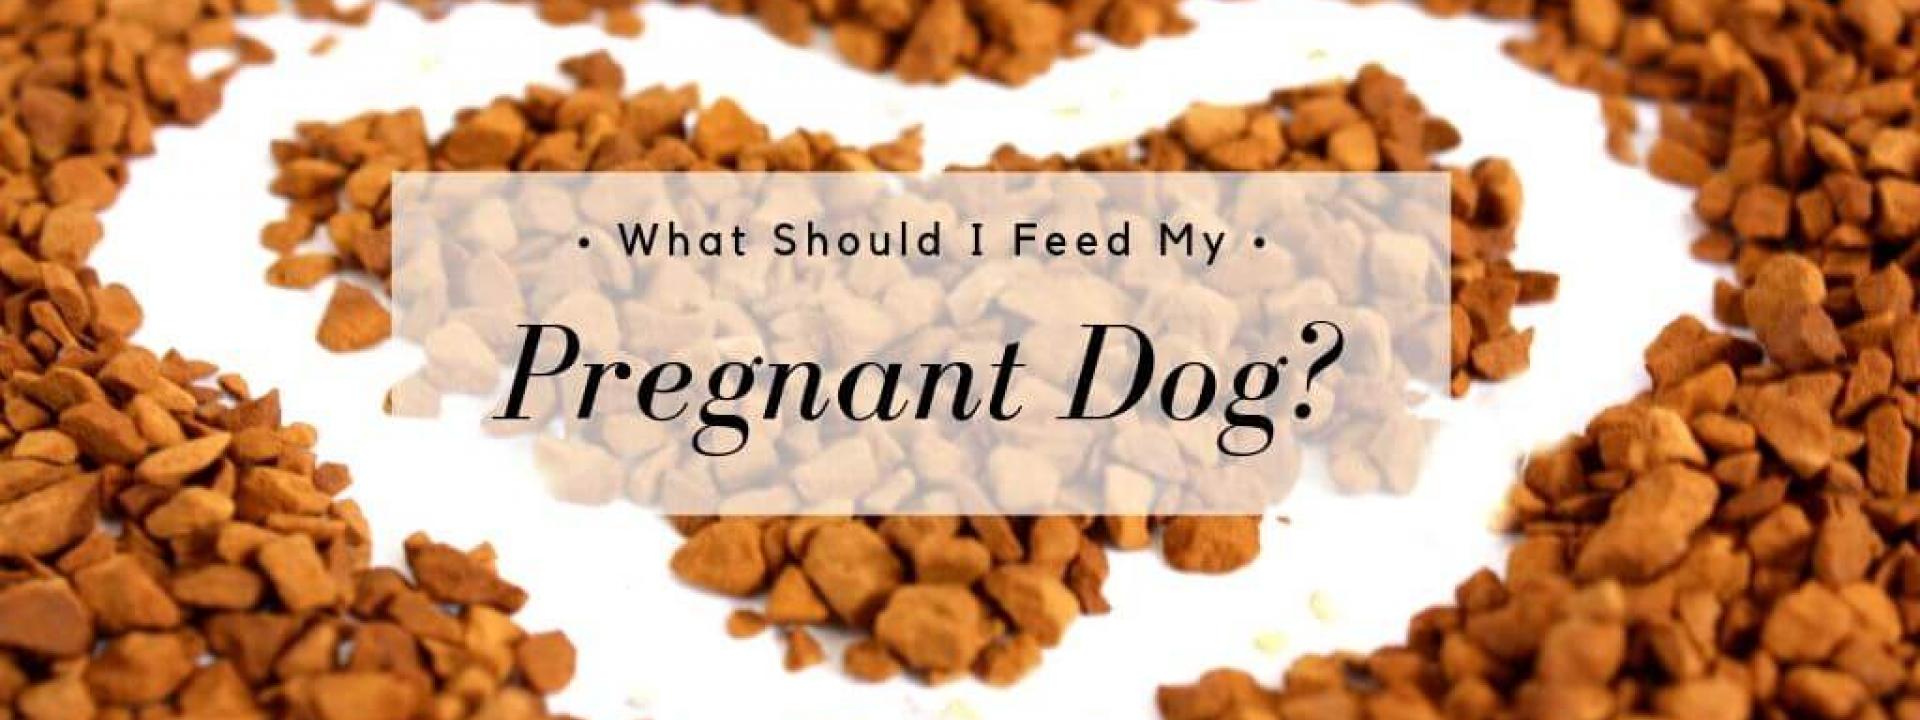 feed-pregnant-dog-blog-header.jpg